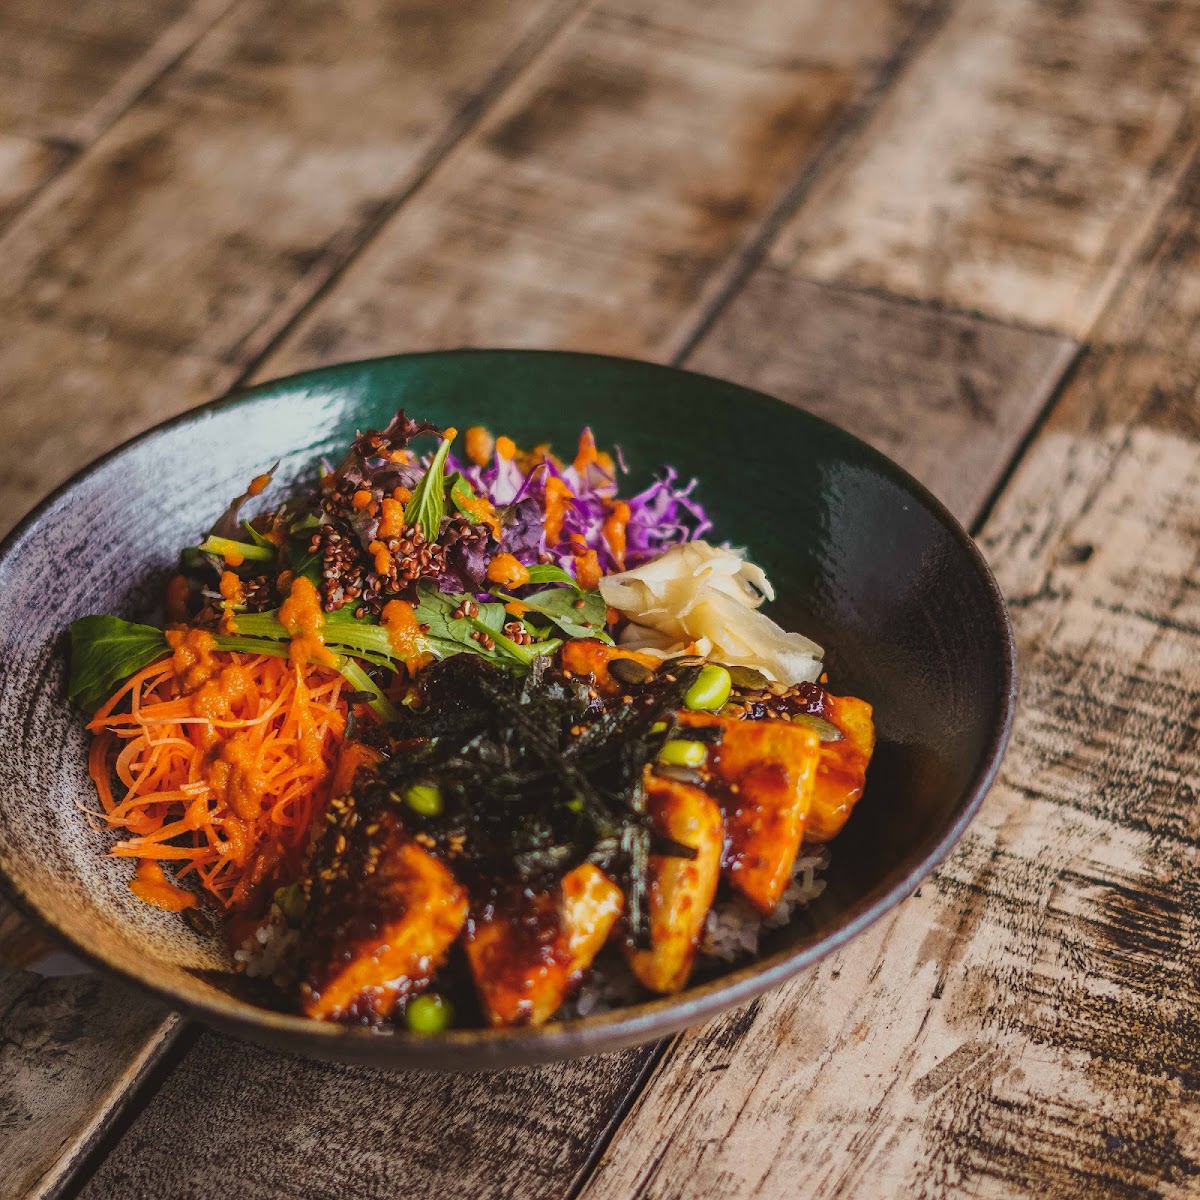 Organic Tofu Bowl with JANKEN BBQ sauce
One of the most popular menus!